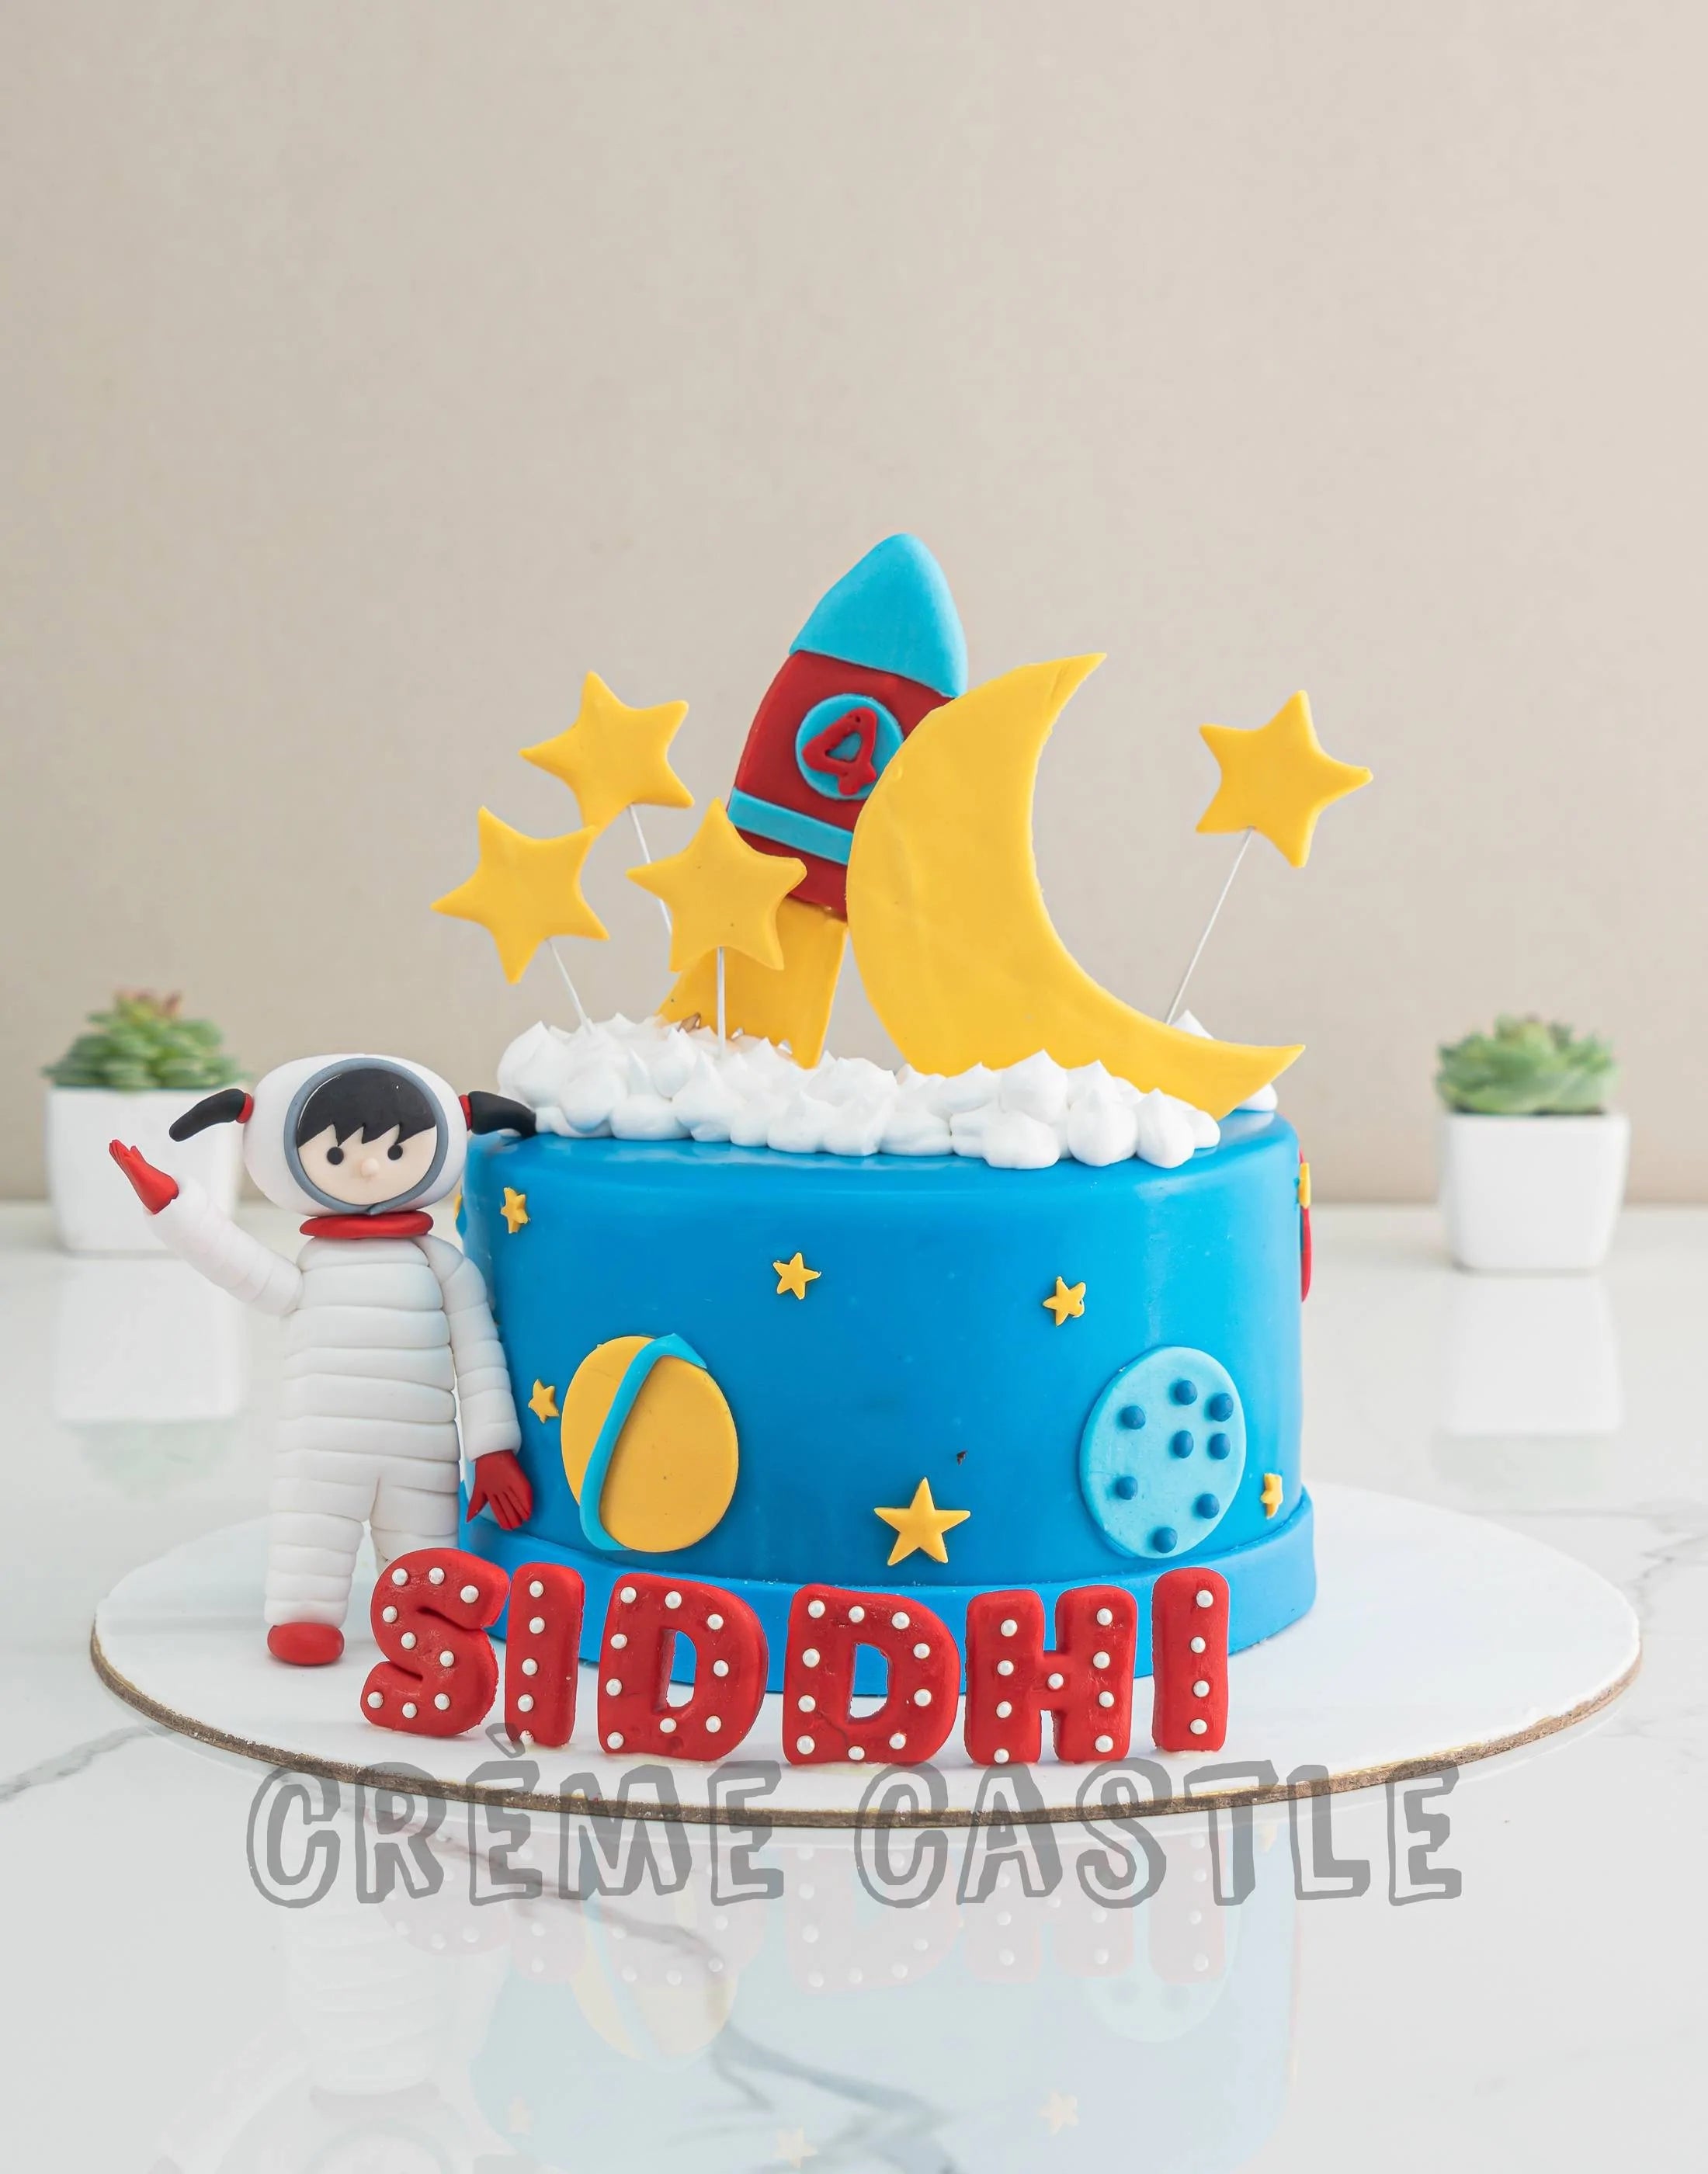 Space Themed Birthday Cake!